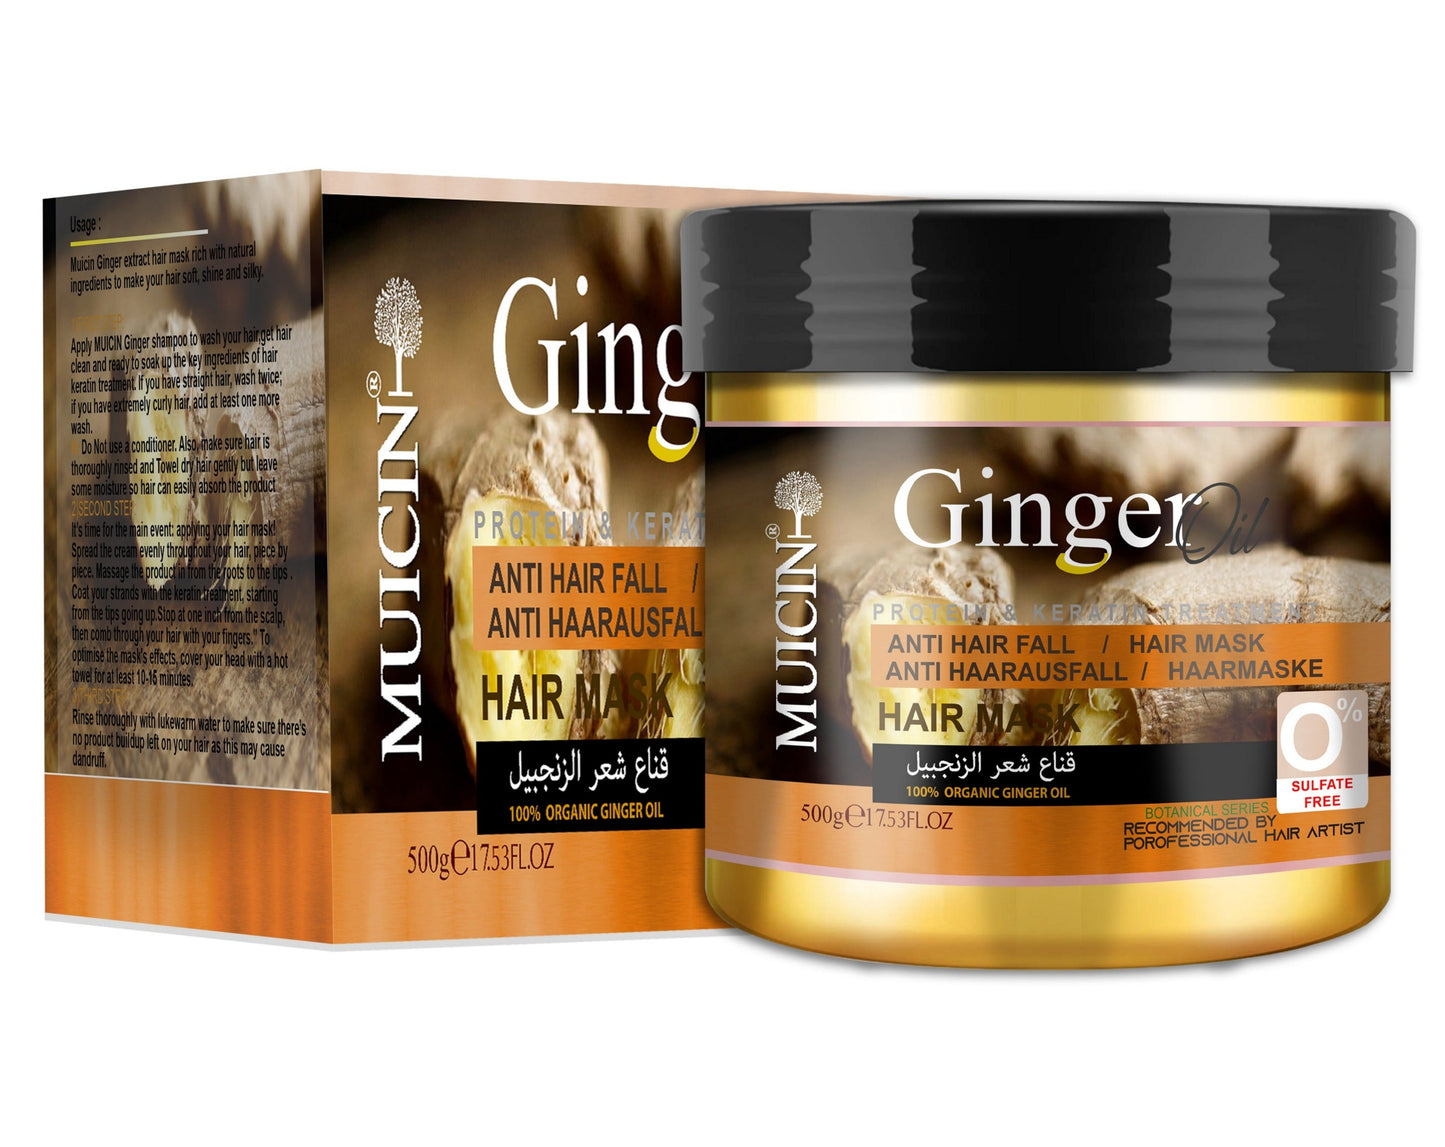 MUICIN - Ginger Hair Mask Anti Hair Fall - 500ml